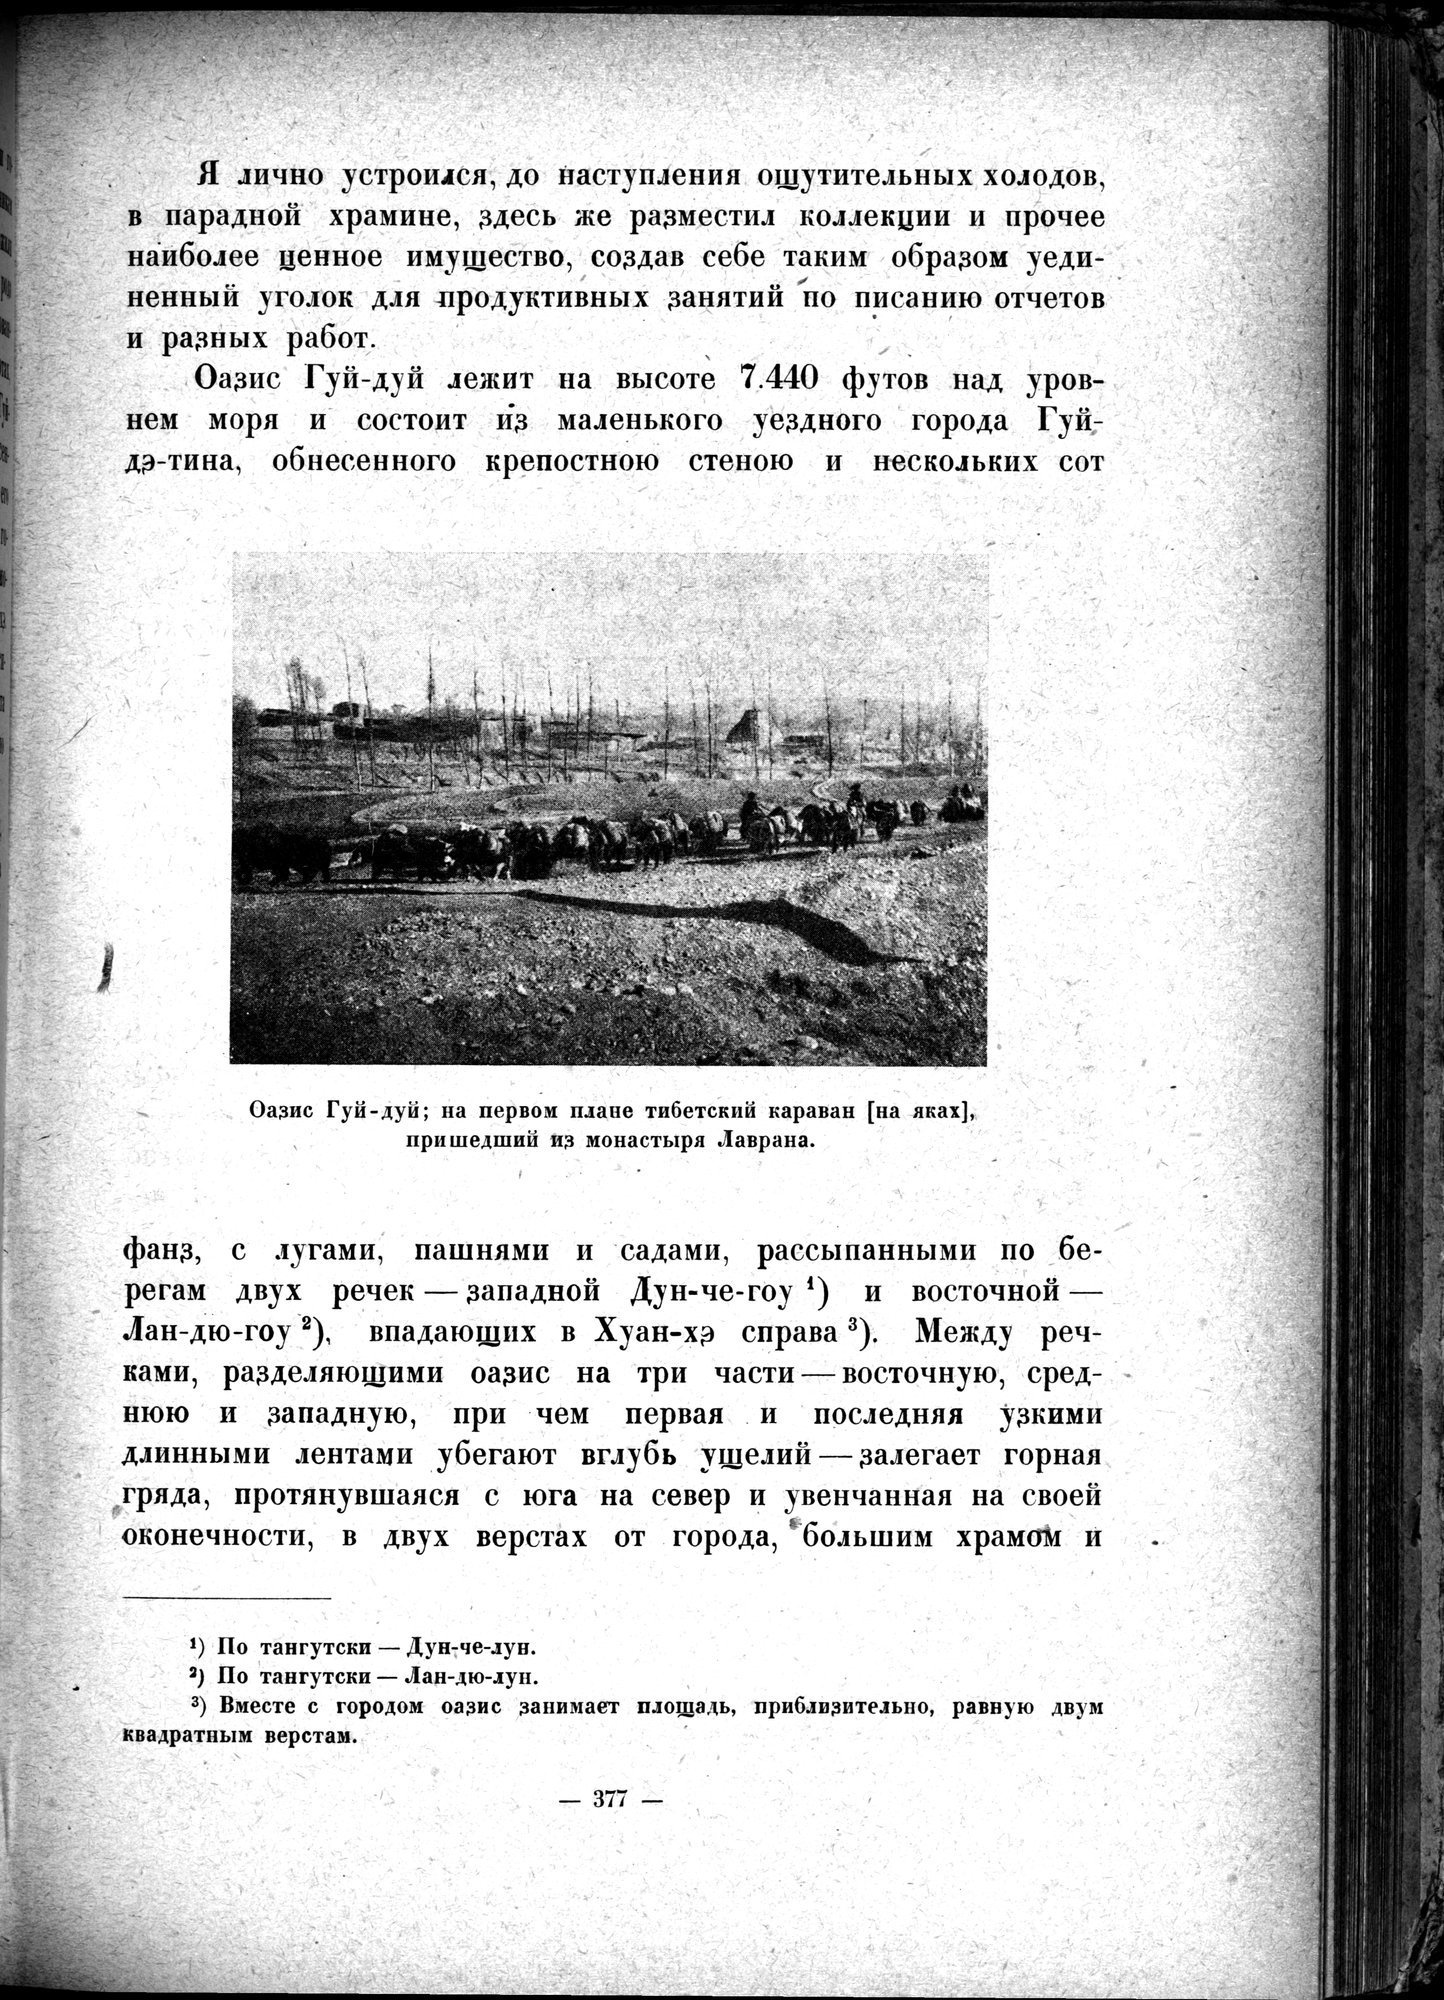 Mongoliya i Amdo i mertby gorod Khara-Khoto : vol.1 / Page 429 (Grayscale High Resolution Image)